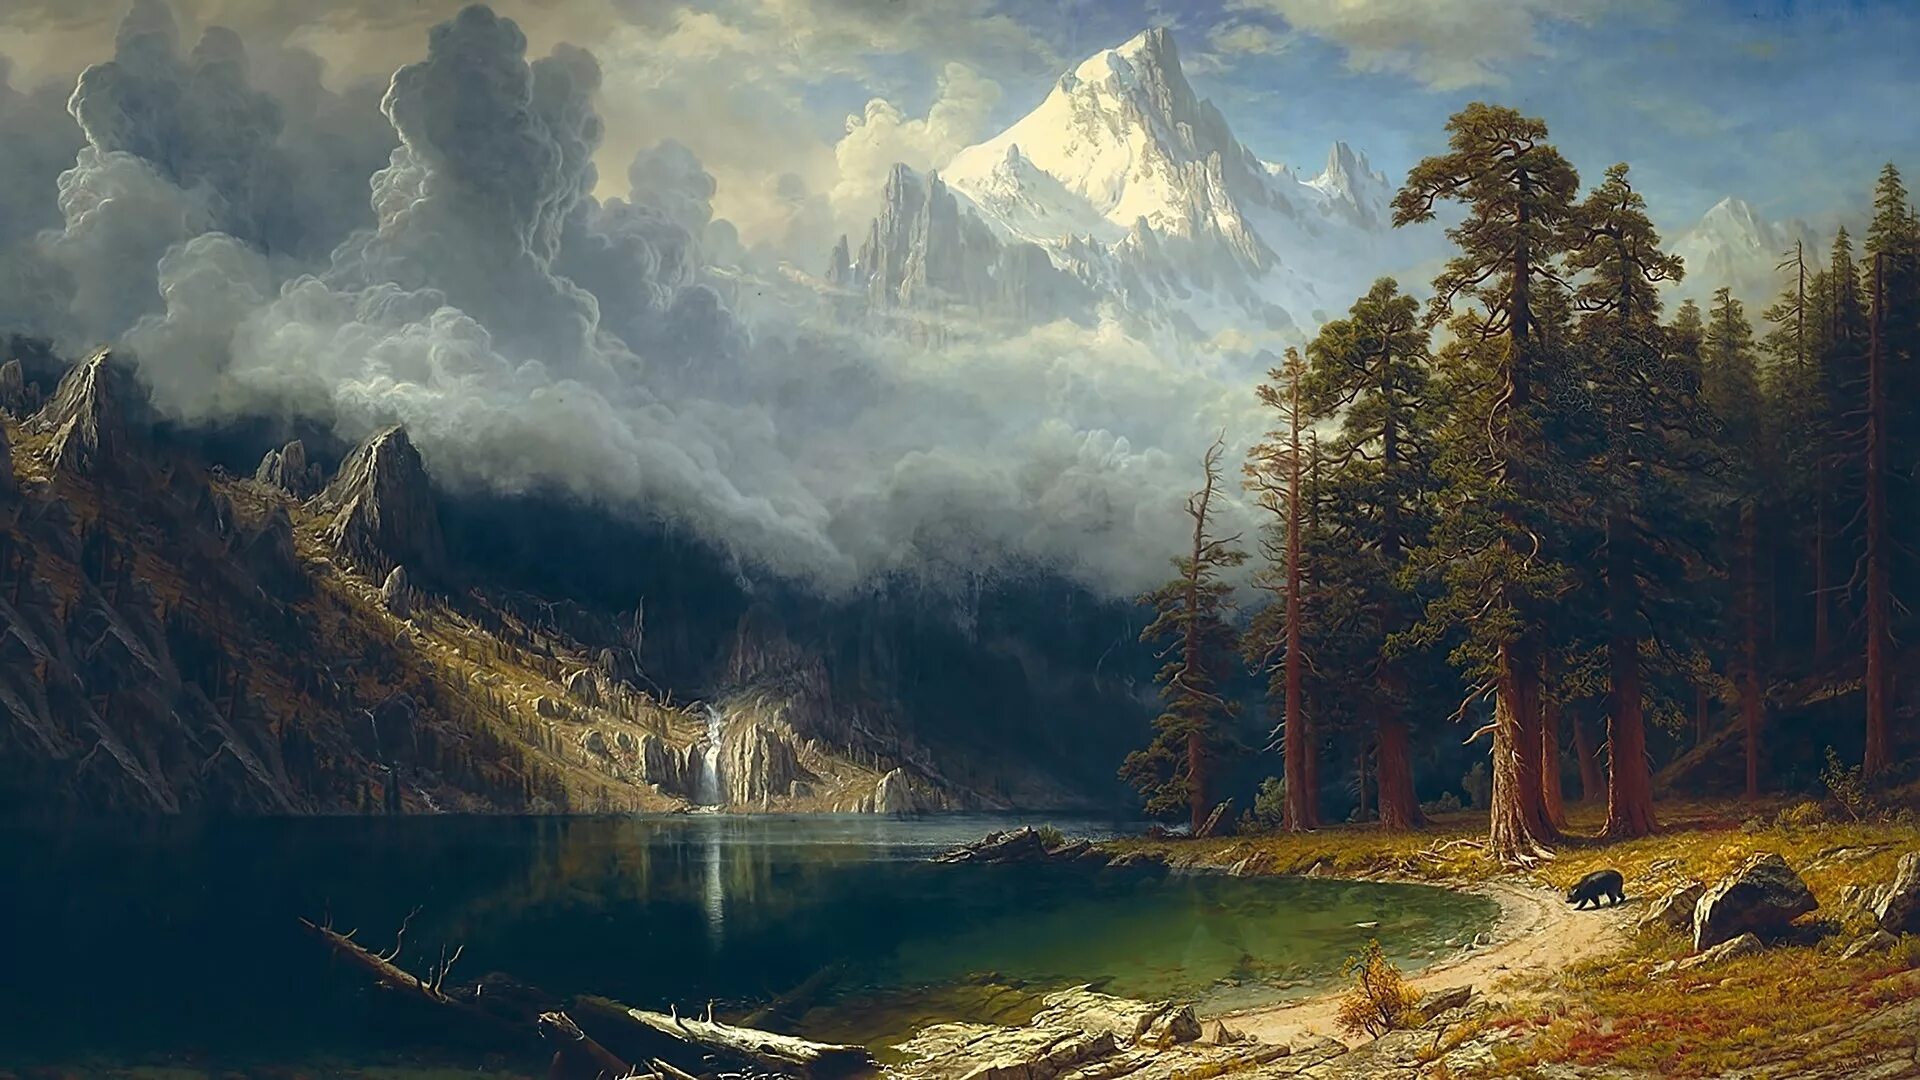 Обои картины. Альберт Бирштадт. Альберт Бирштадт (Albert Bierstadt; 1830-1902). Альберт Бирштадт картины. Альберт Бирштадт (1830 - 1902) – американский художник.